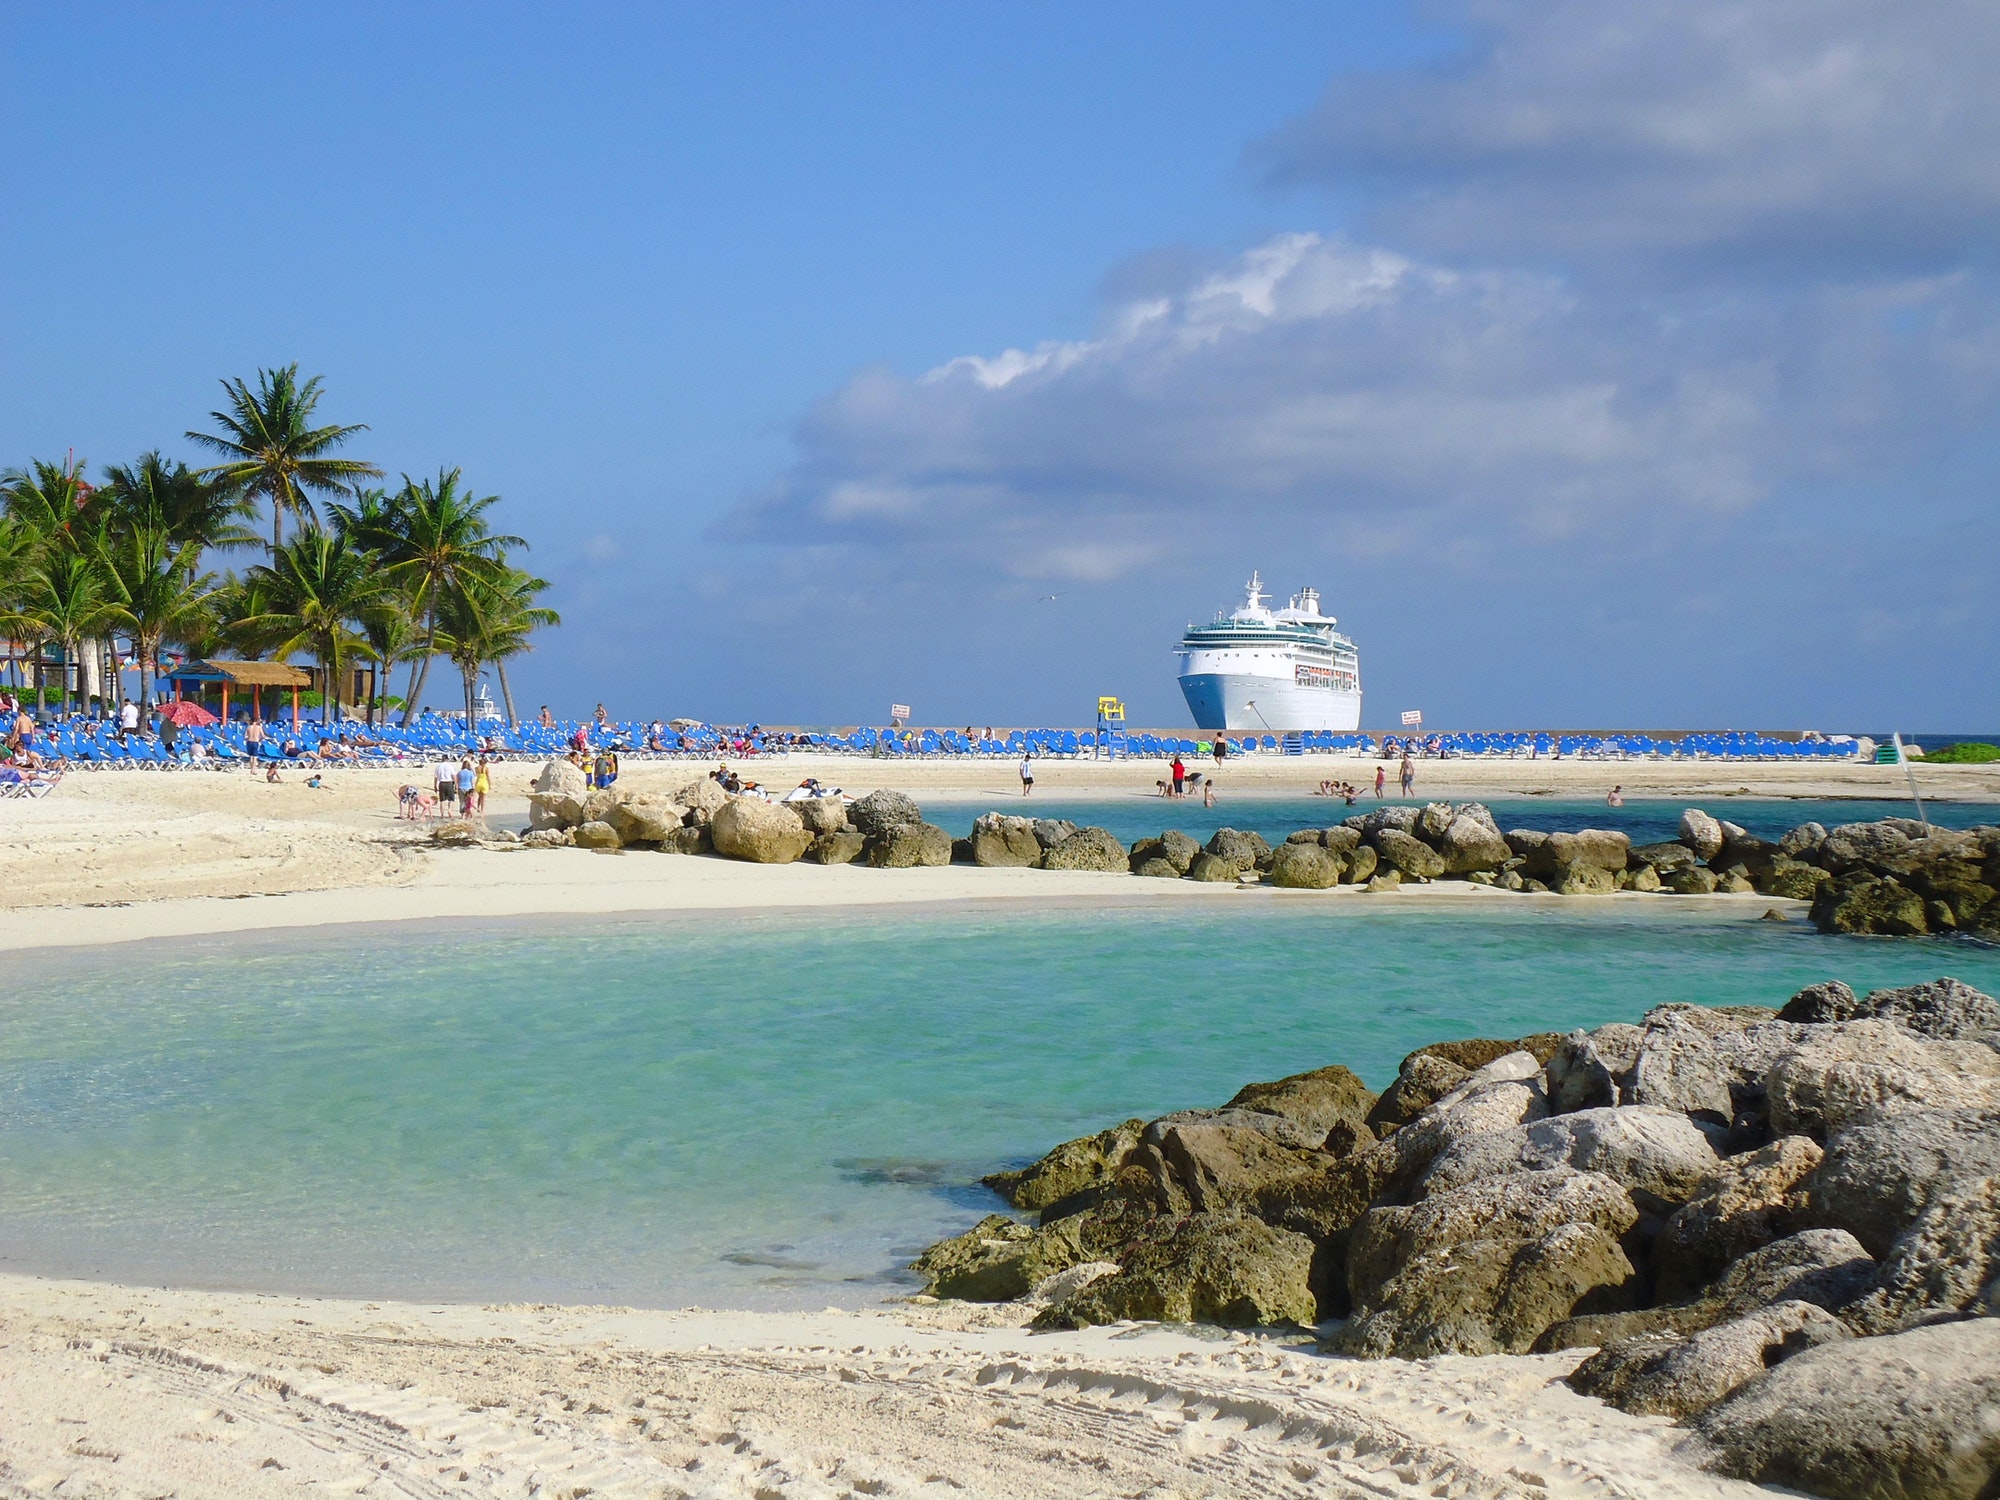 Karibik mit Costa Cruises